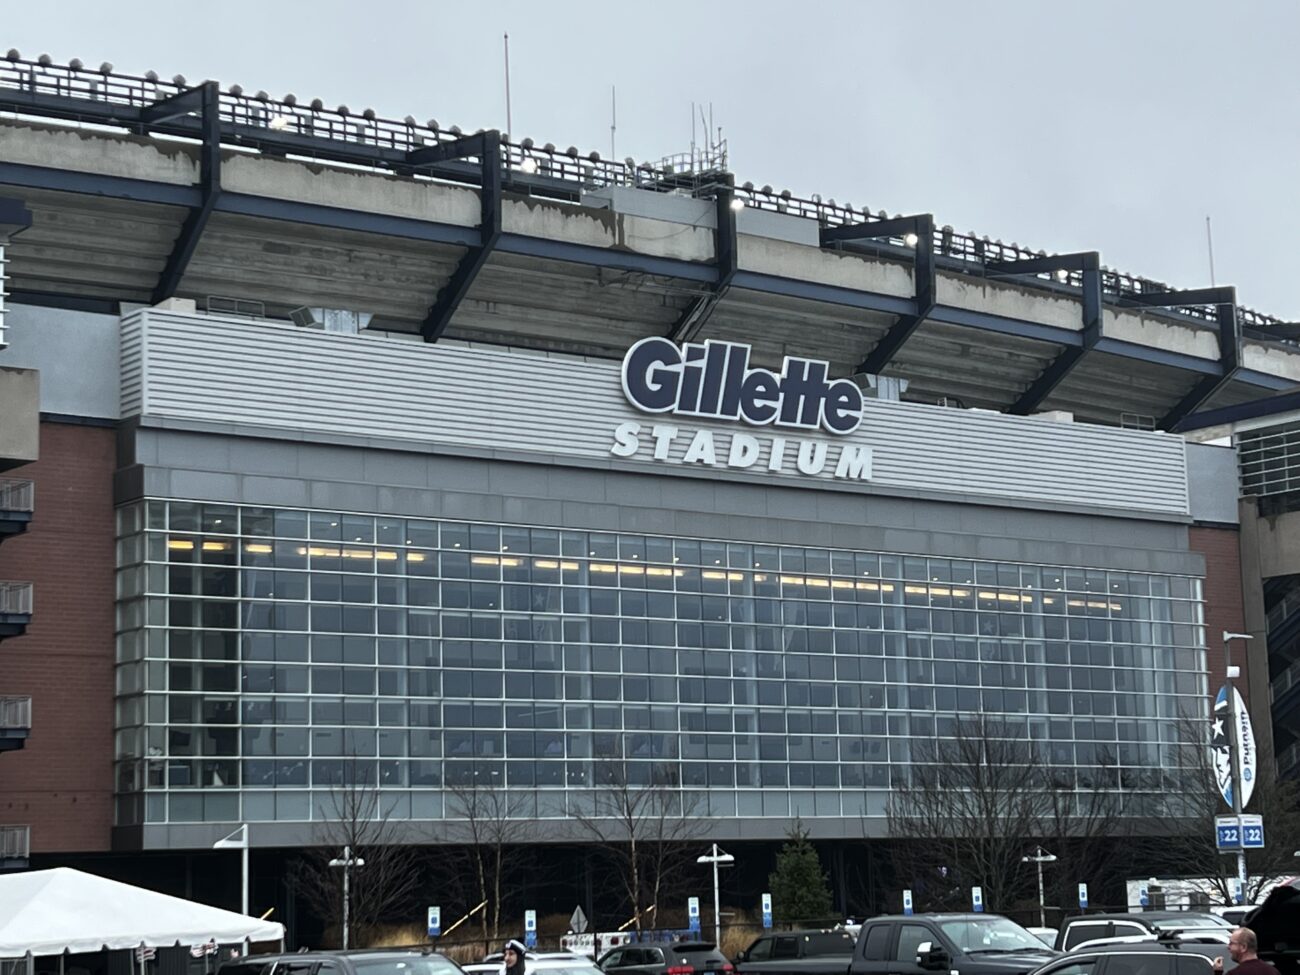 Gillette Stadium New England venue guide 2023 Itinerant Fan